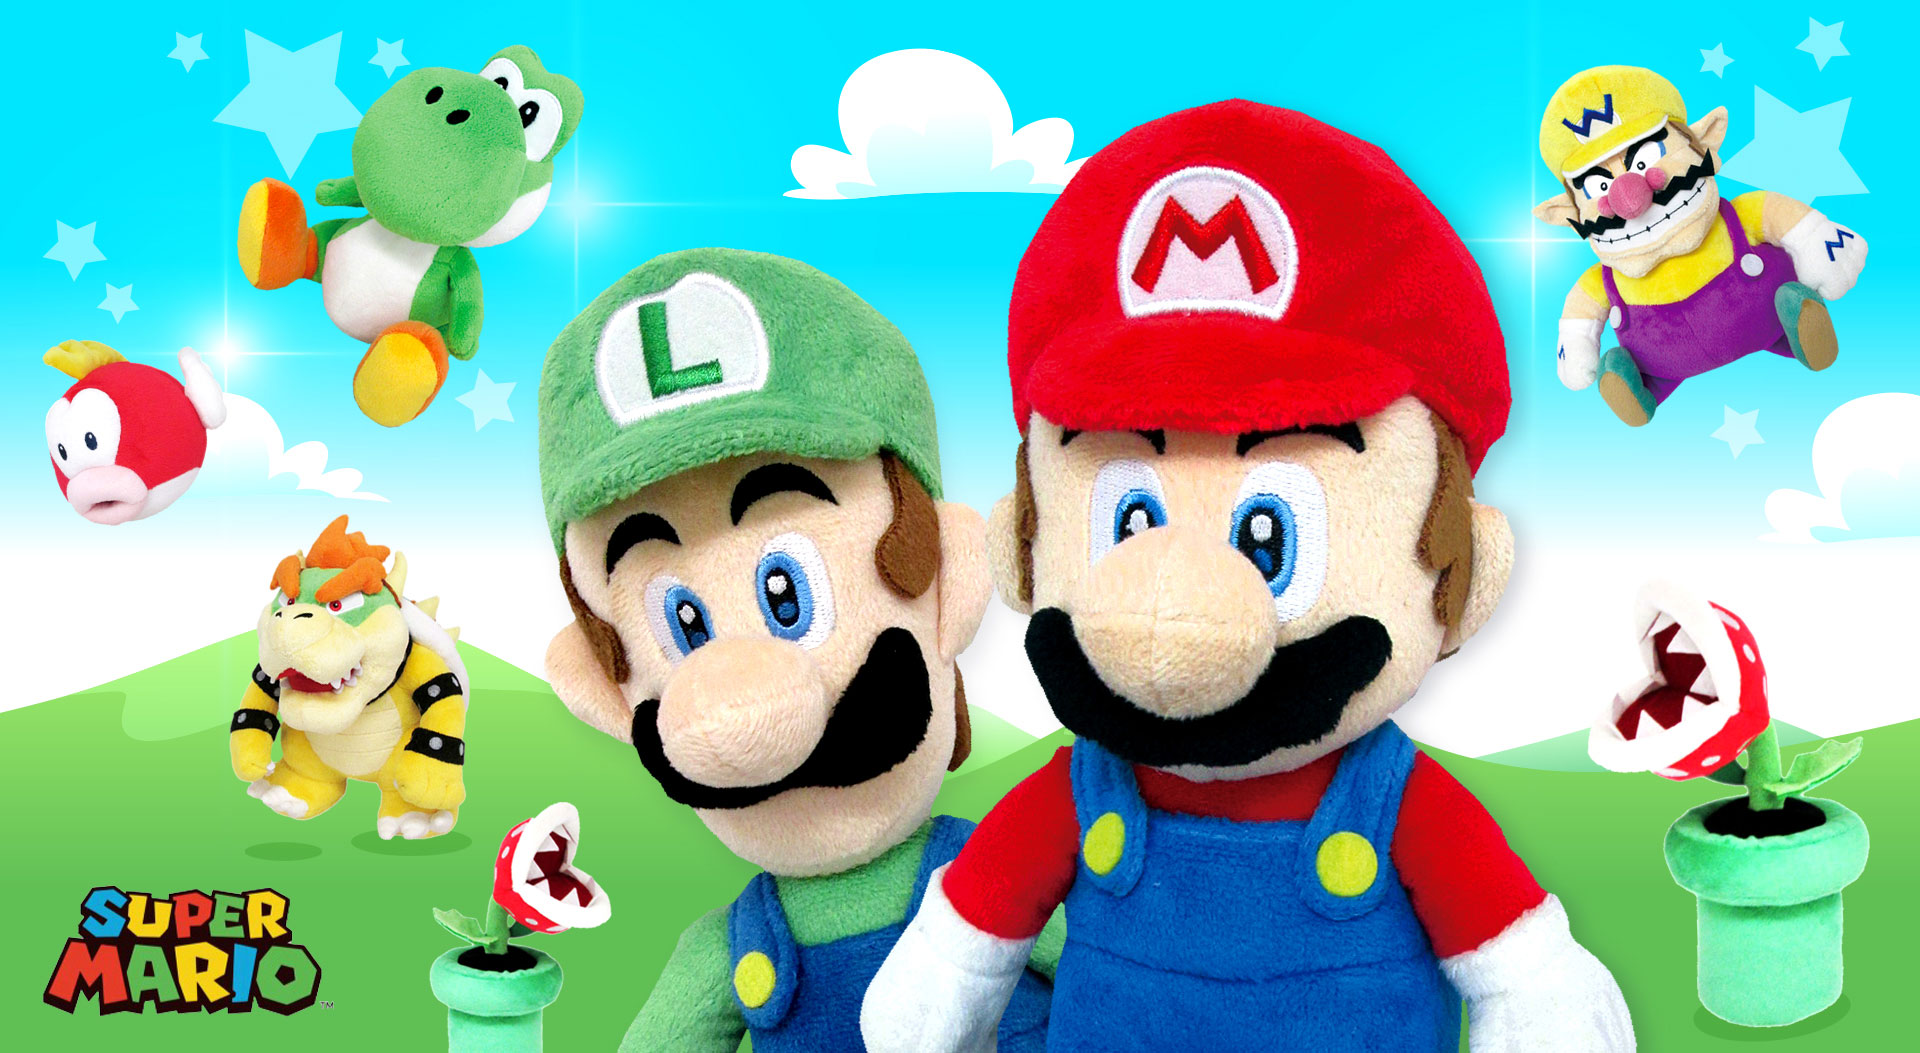 Peluche Super Mario Bros. - Mario - Little Buddy Toys